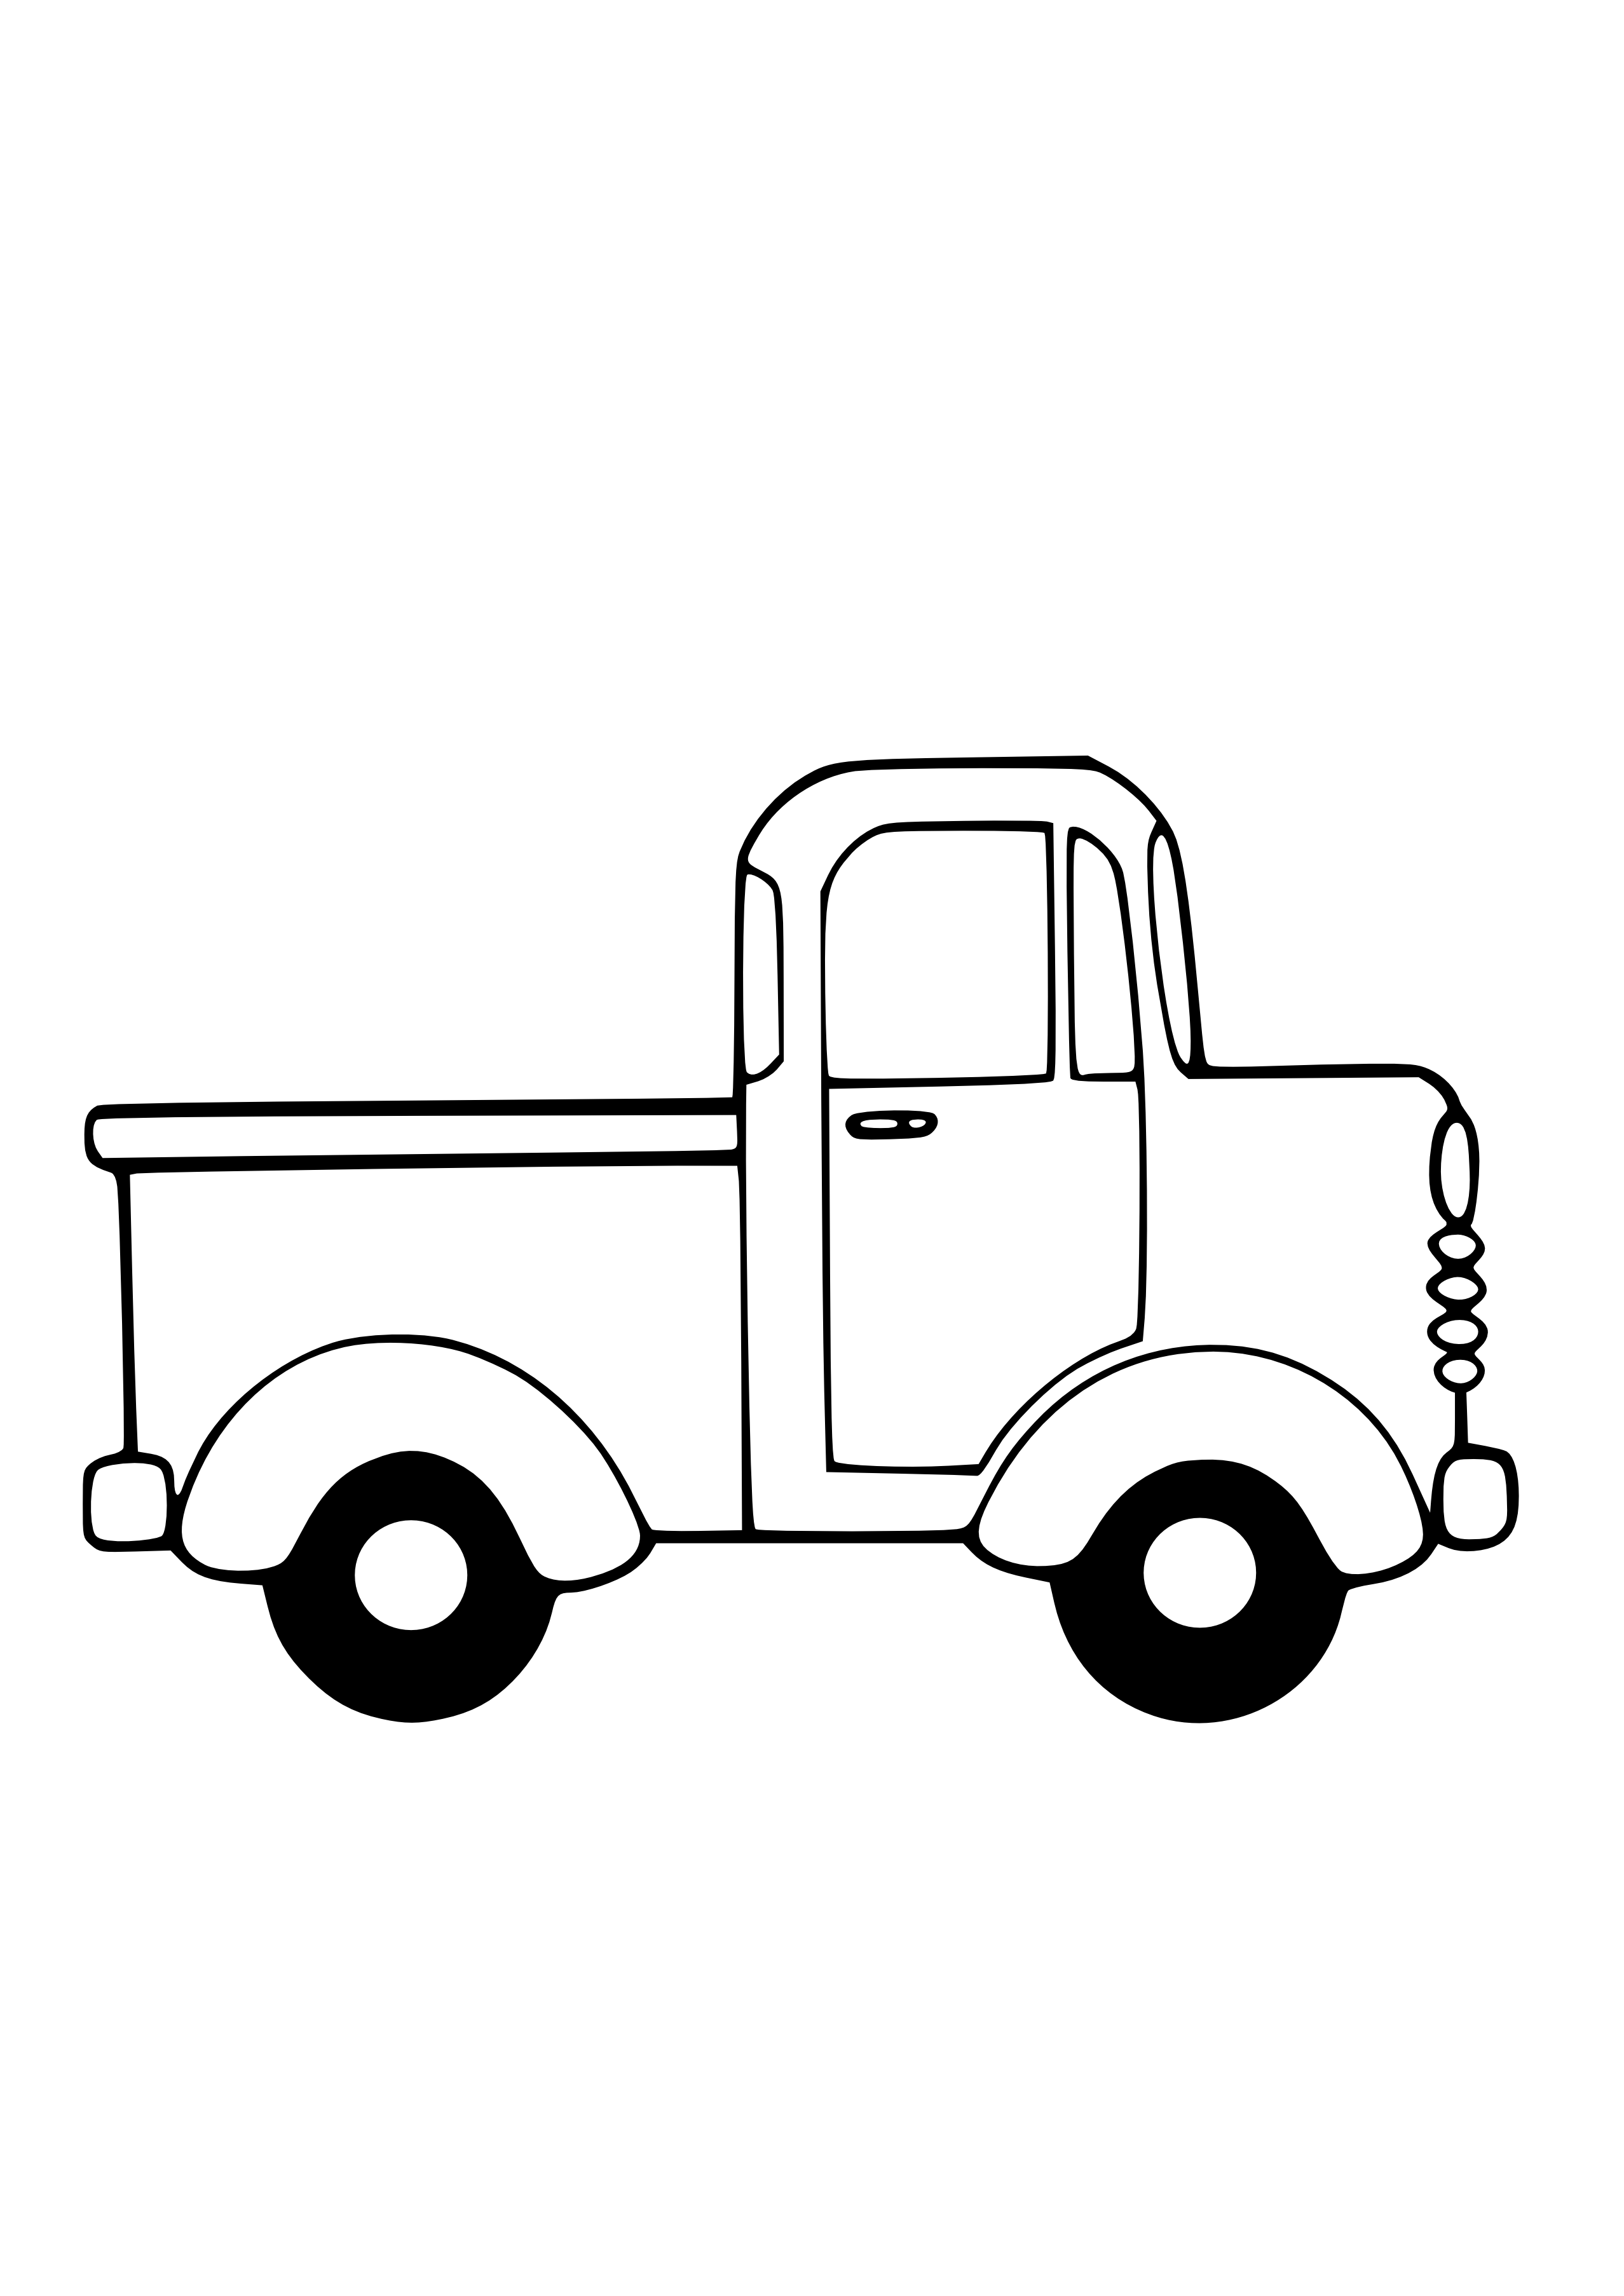 clip art toy cars trucks